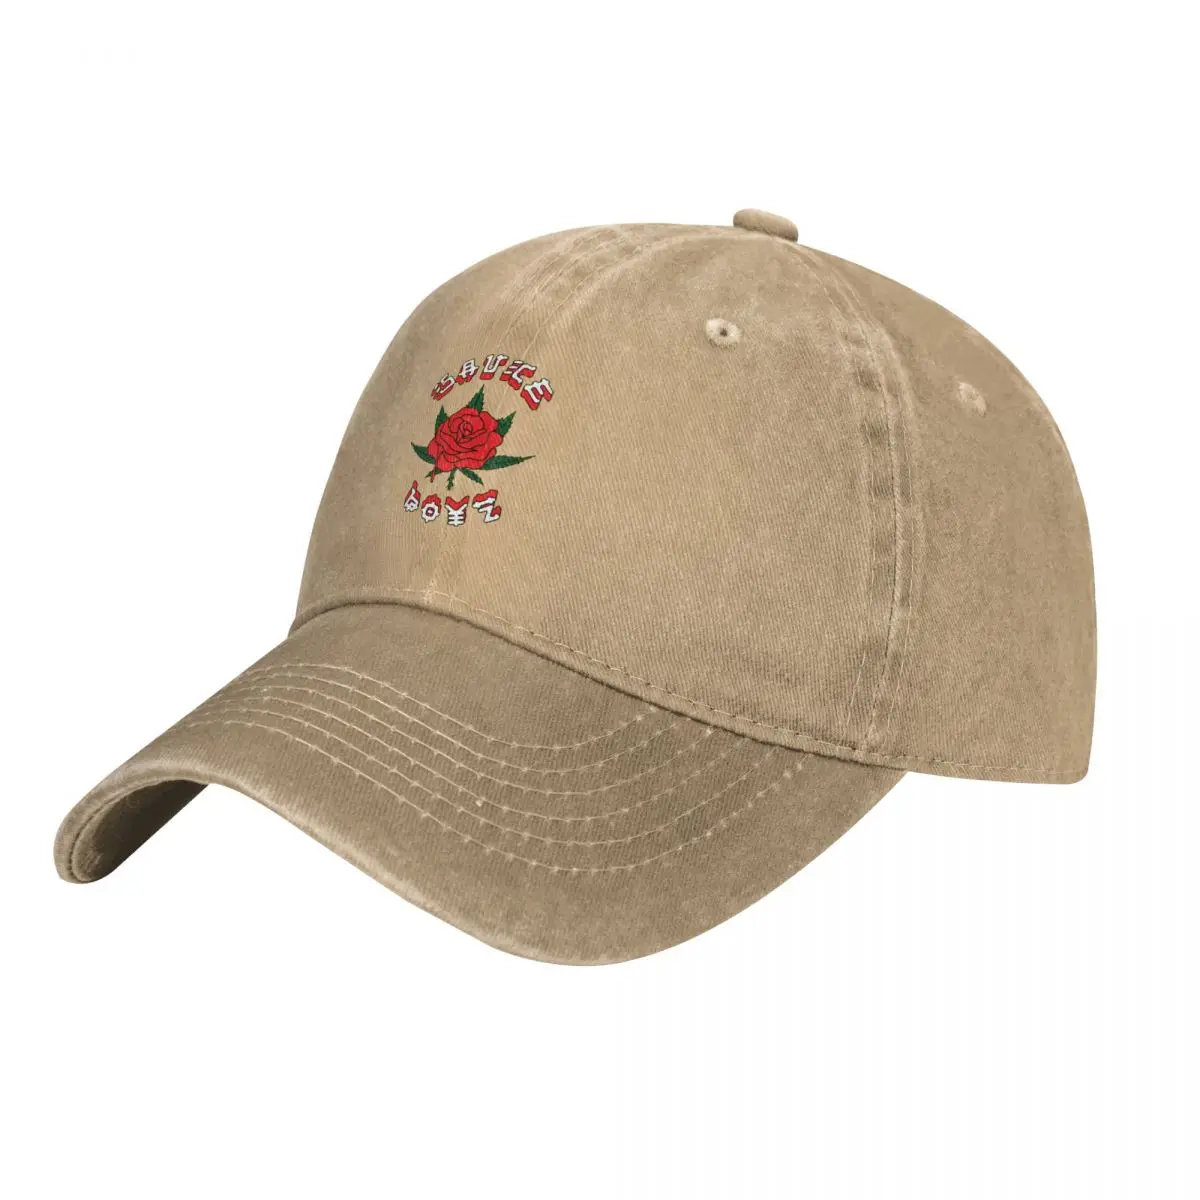 

Eladio Carrion Merch Eladio Carrion Sauce Boyz Cap Cowboy Hat Bobble hat wild ball hat women's hats for the sun Men's